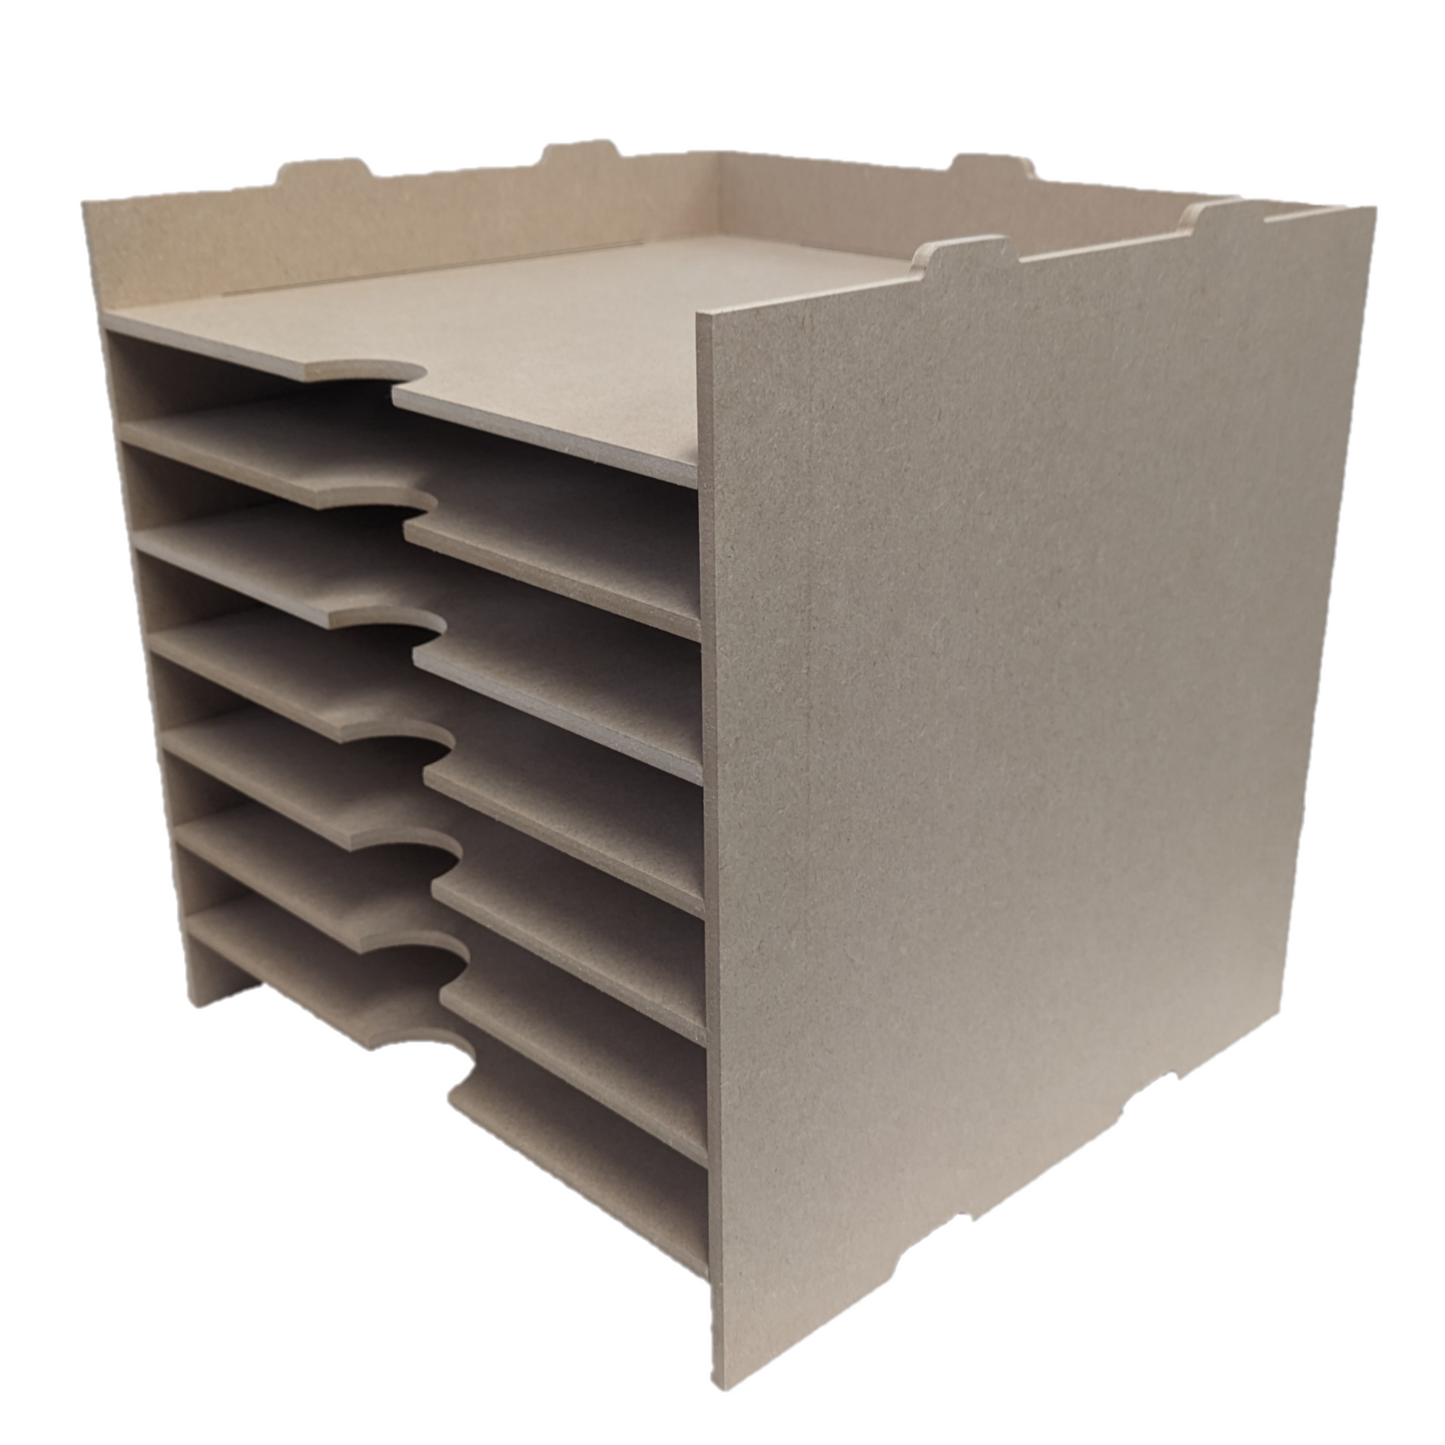 12 x 12'' Inch Paper Storage Unit for Craft etc fits Ikea Kallax cube storage